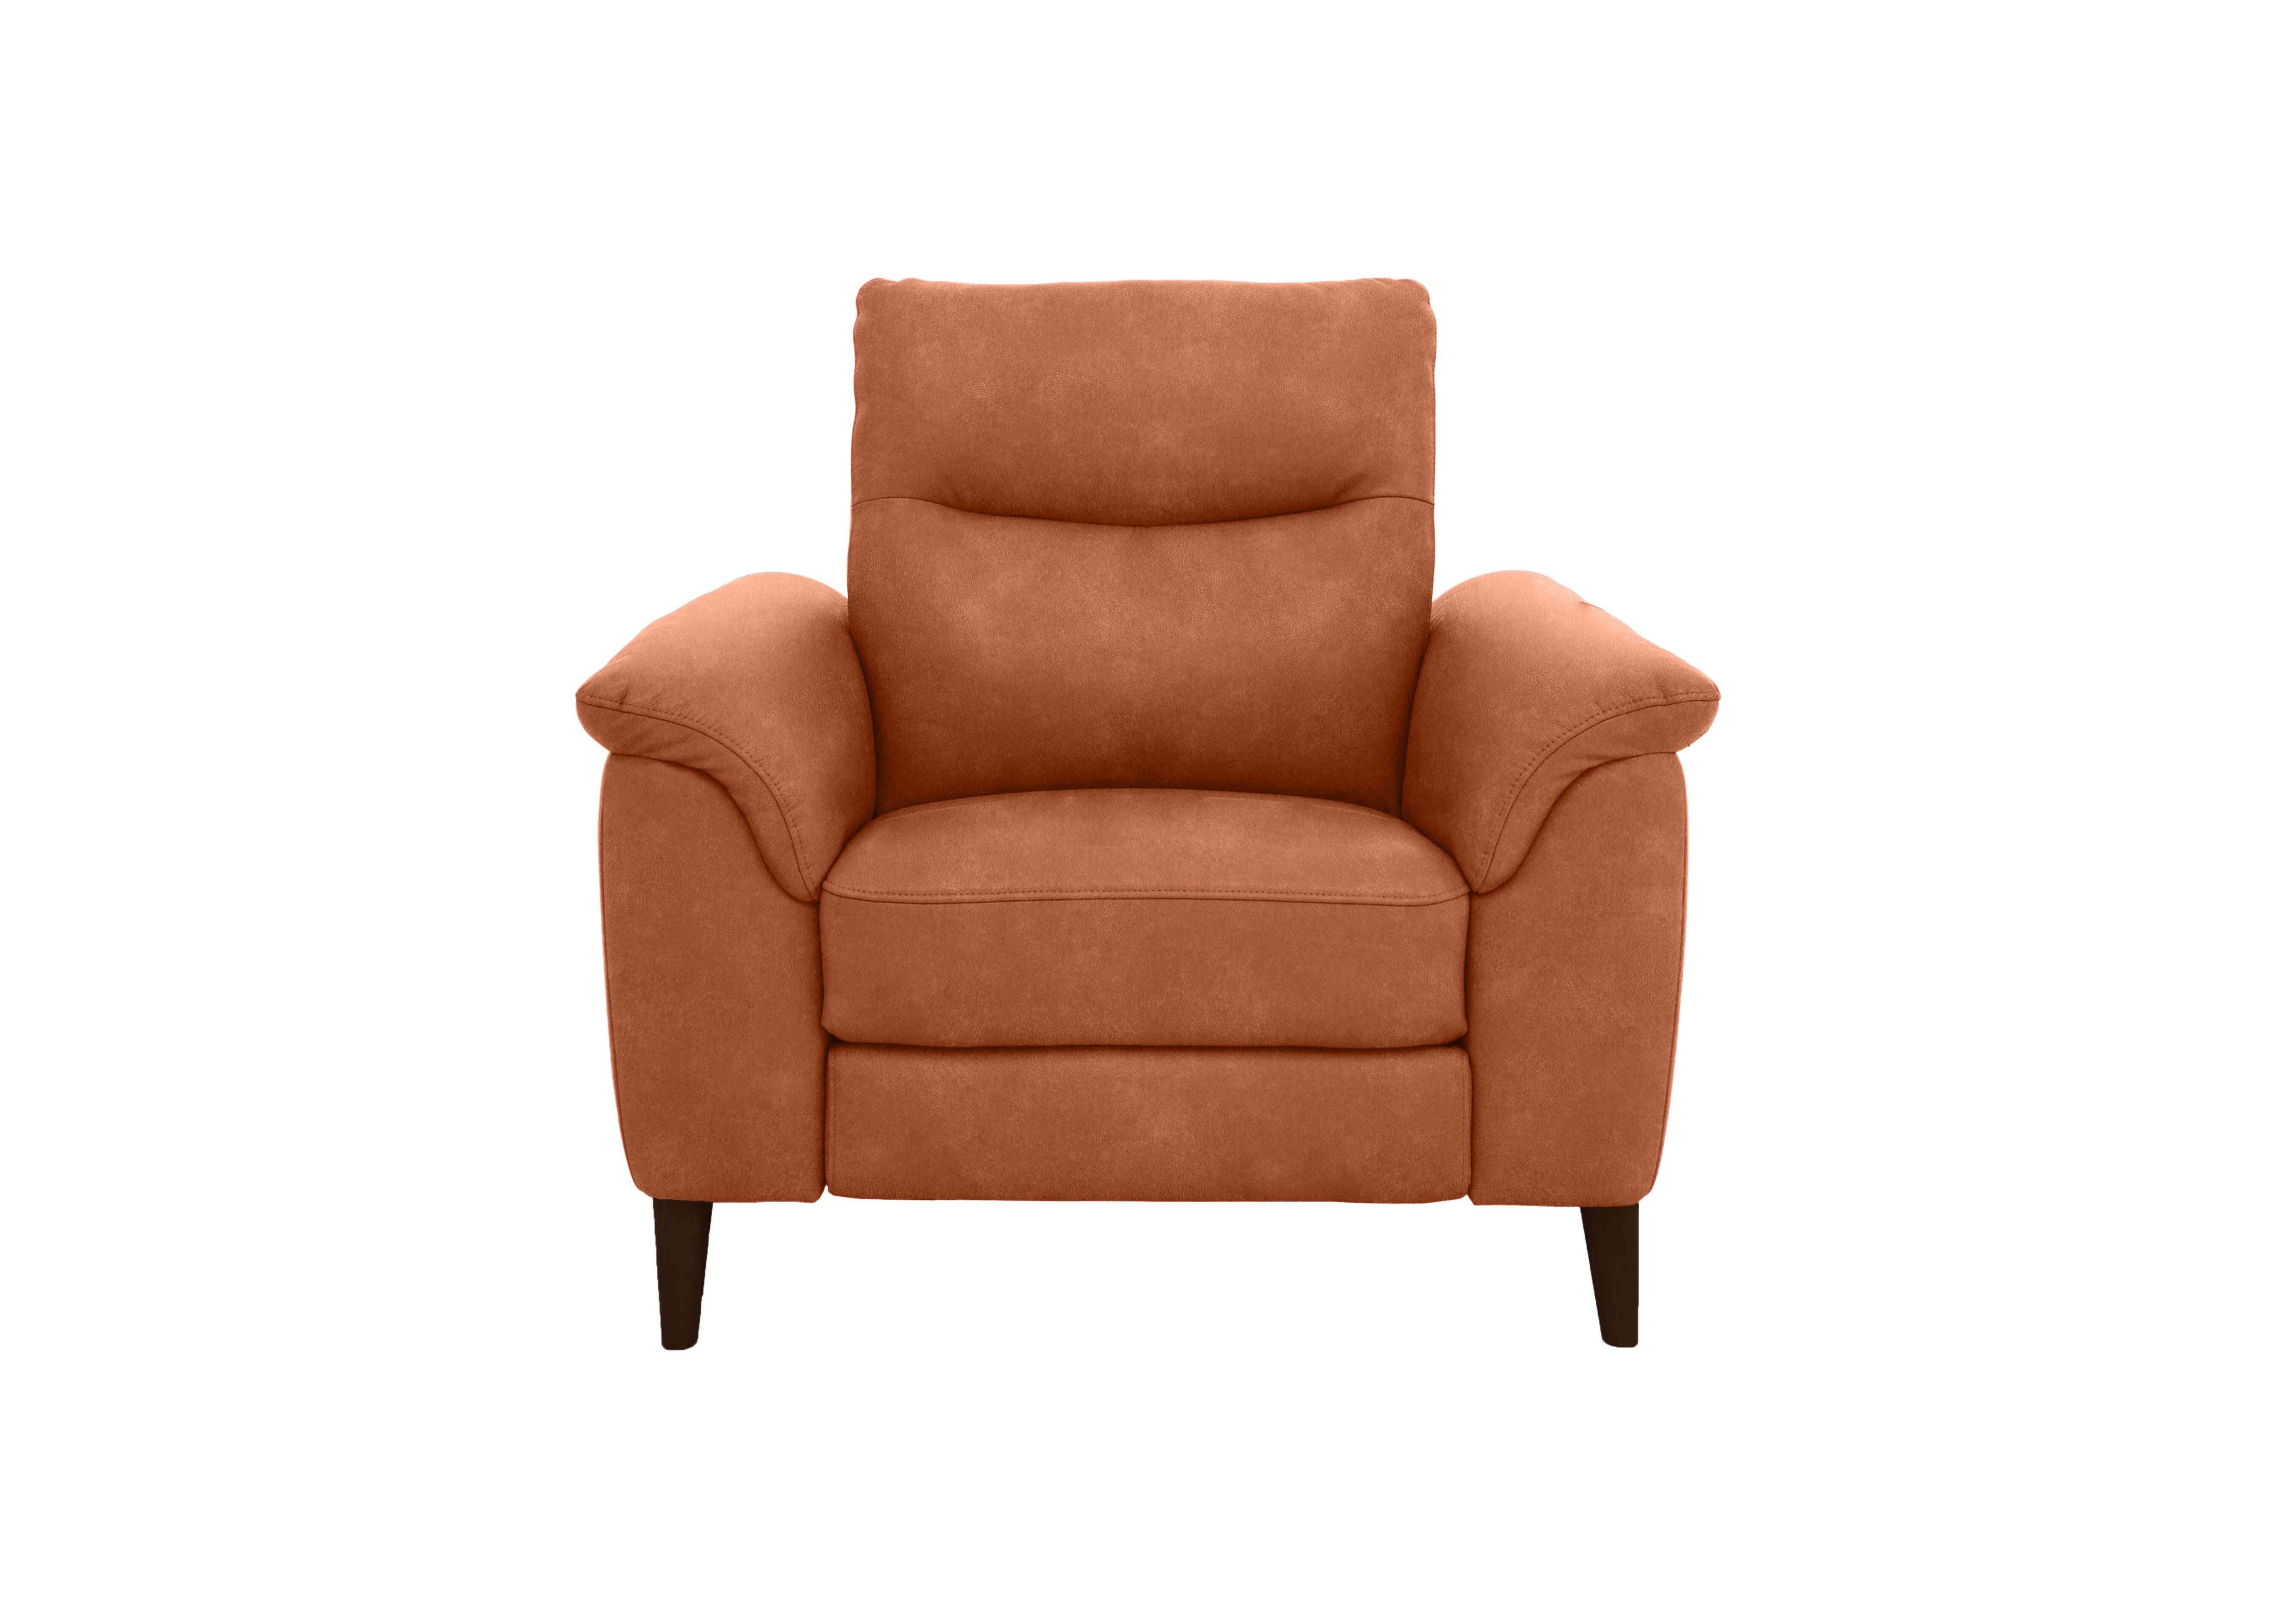 Morgan Fabric Armchair in Pumpkin Dexter 09 43509 on Furniture Village